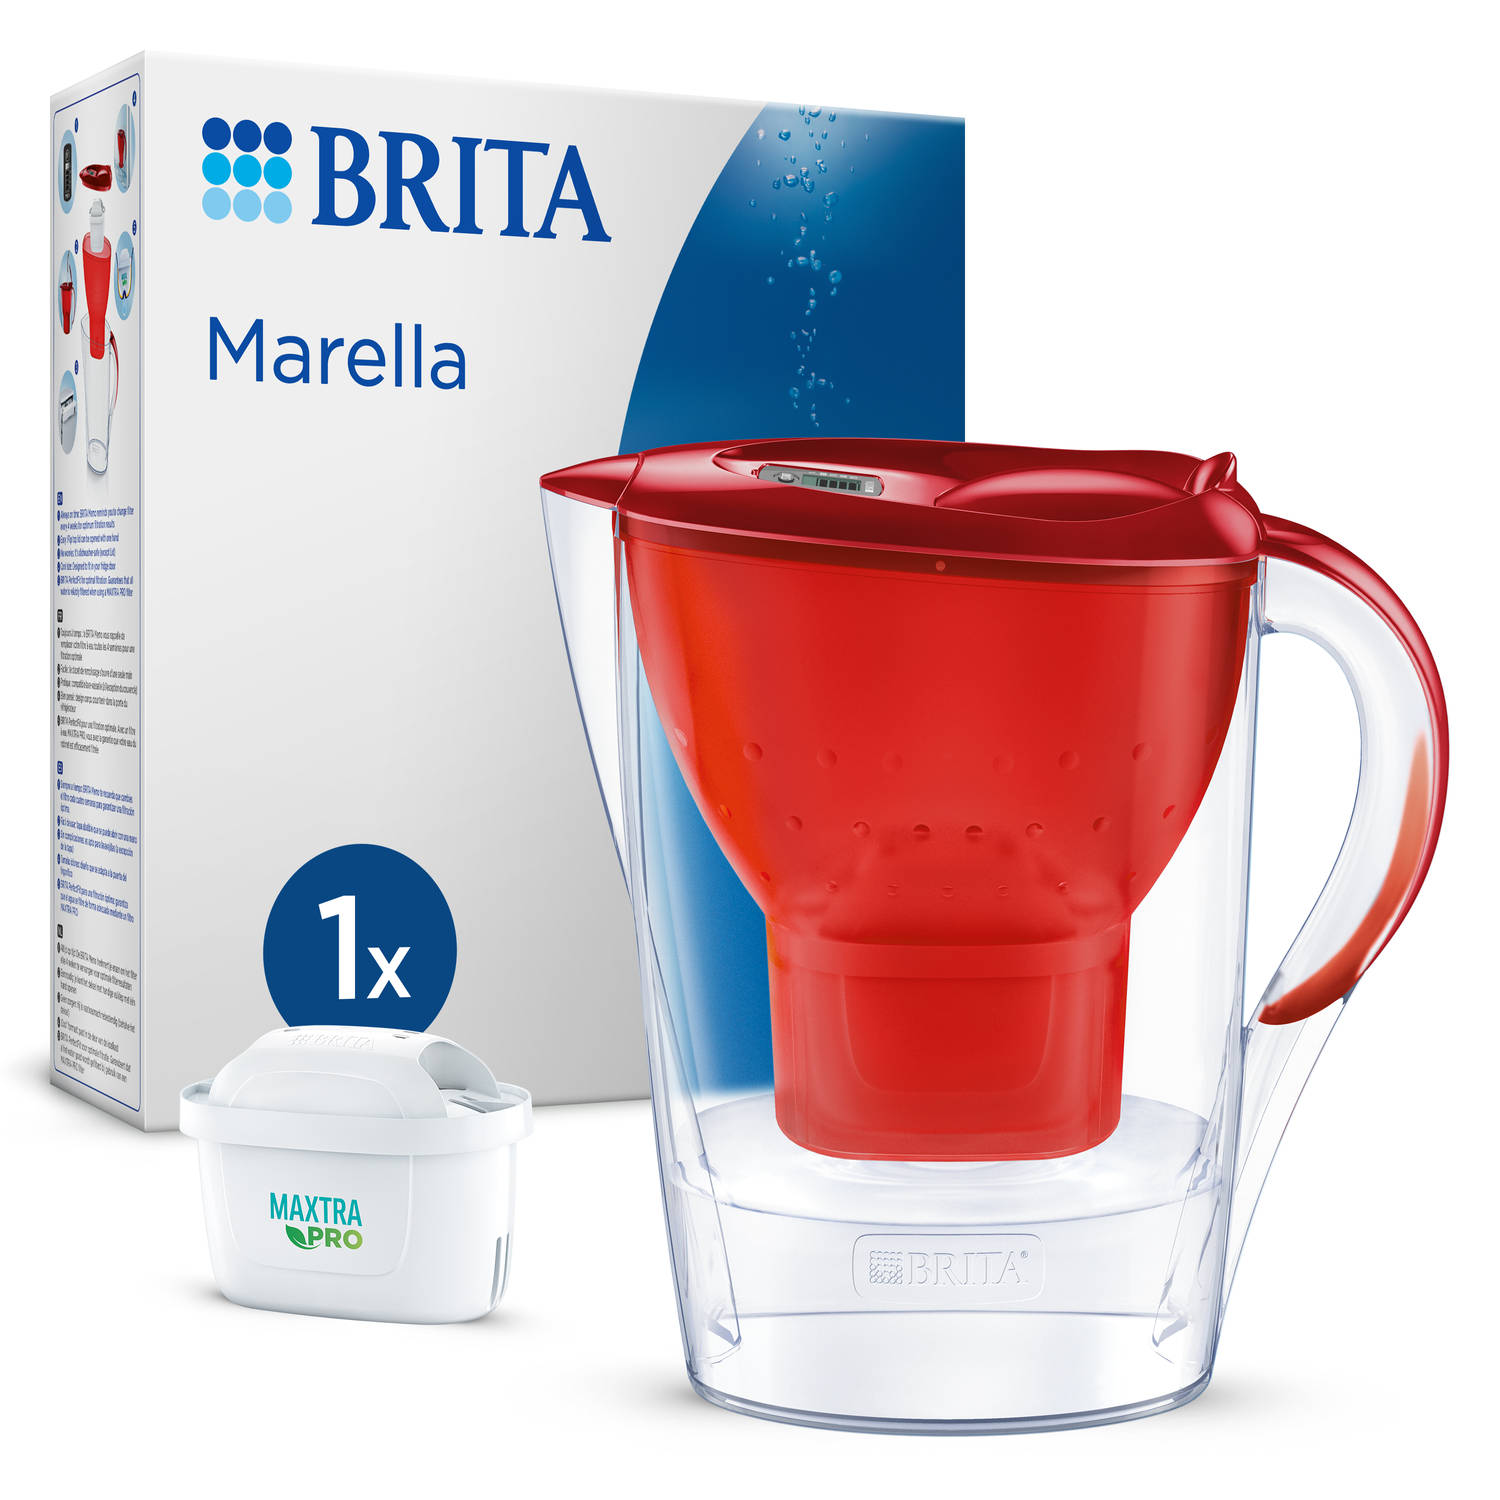 BRITA Marella Cool Waterfilterkan met 1 stuk MAXTRA PRO ALL-IN-1 Filterpatroon - 2,4L - Rood - (SIOC) Duurzaam verpakt voor minder afval | Optimaal Hydrateren met Brita Maxtra Filt